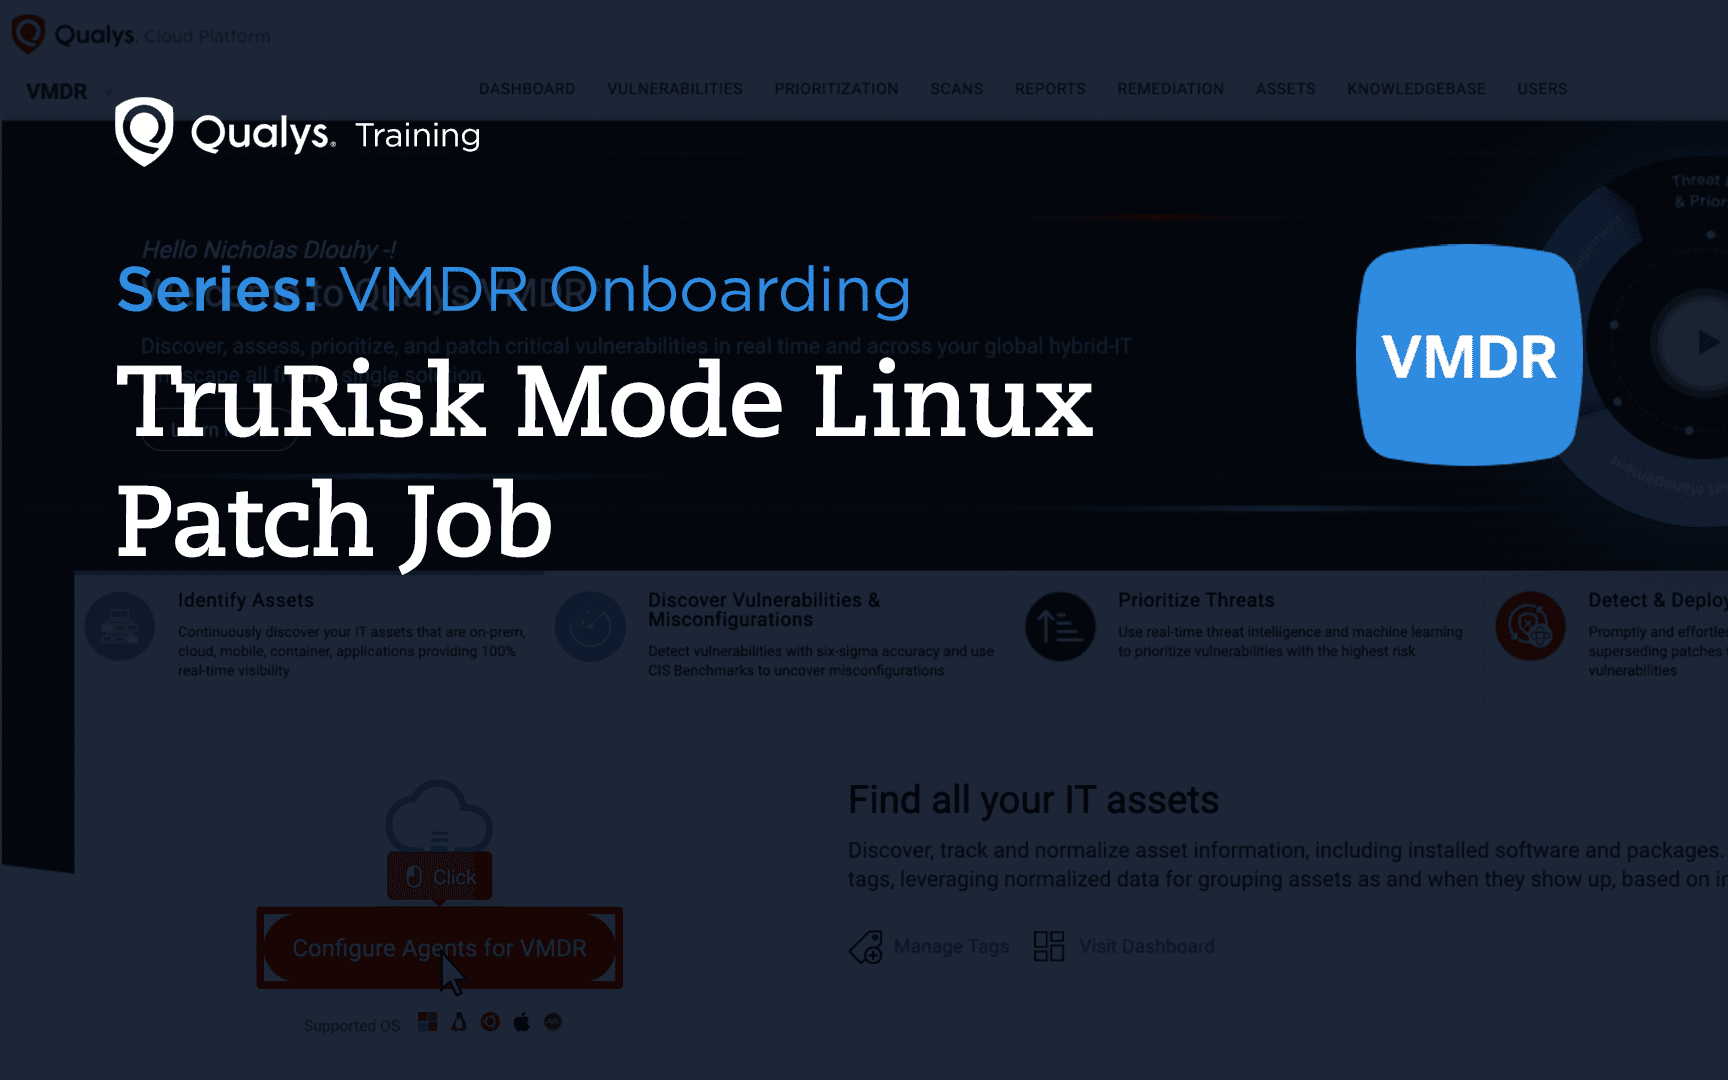 TruRisk Mode Linux Patch Job